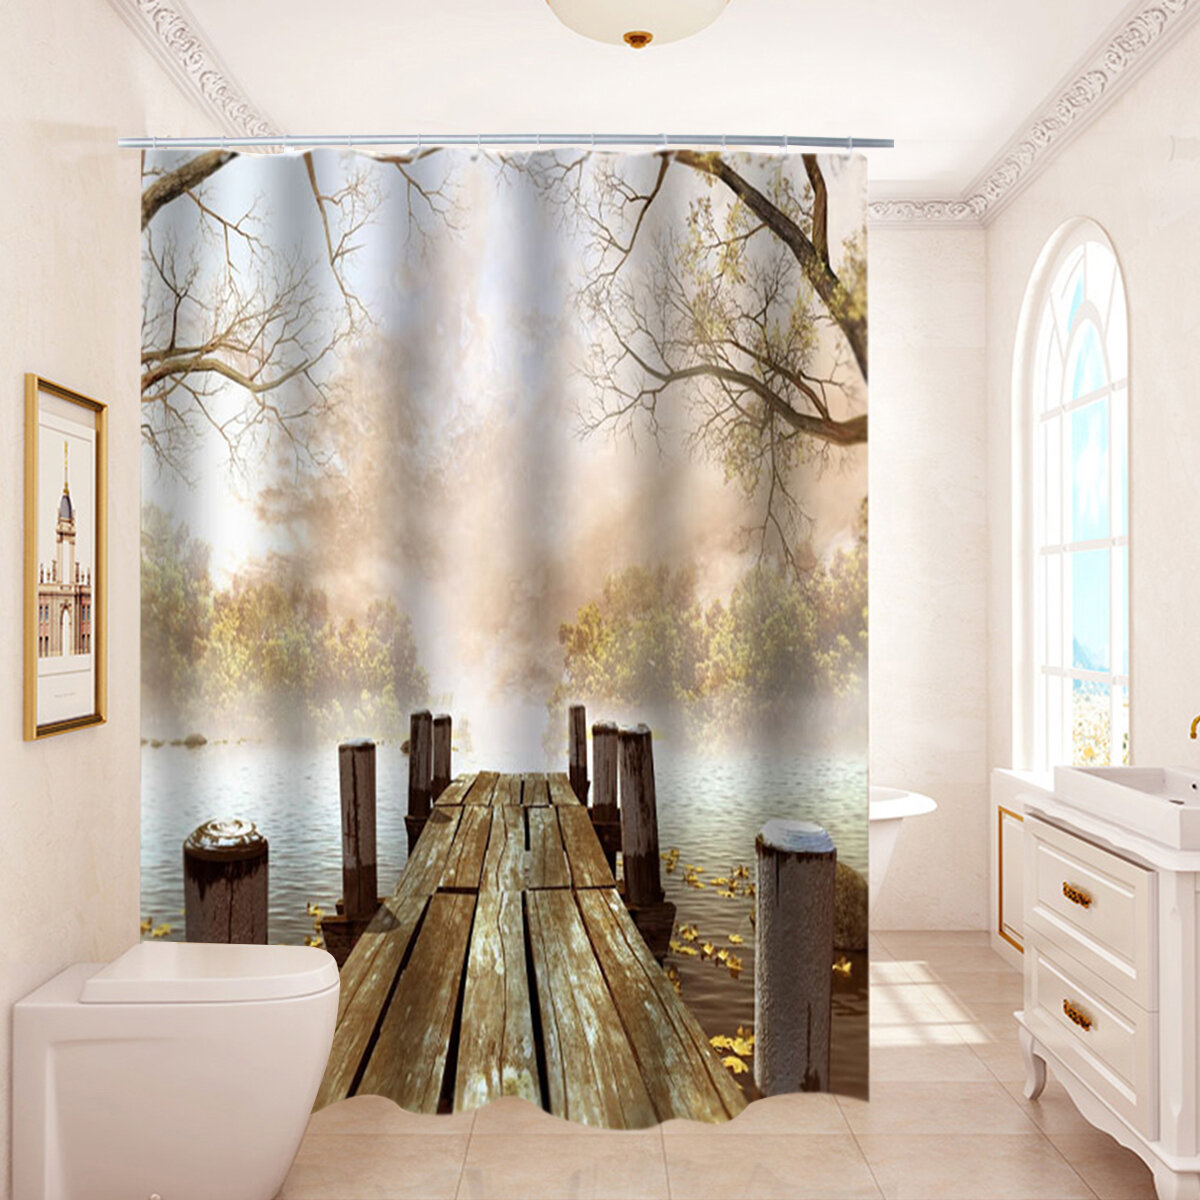 180x180CM Wooden Bridge Printing Bathroom Shower Curtain Toilet Cover Mat Non-Slip Rug Set